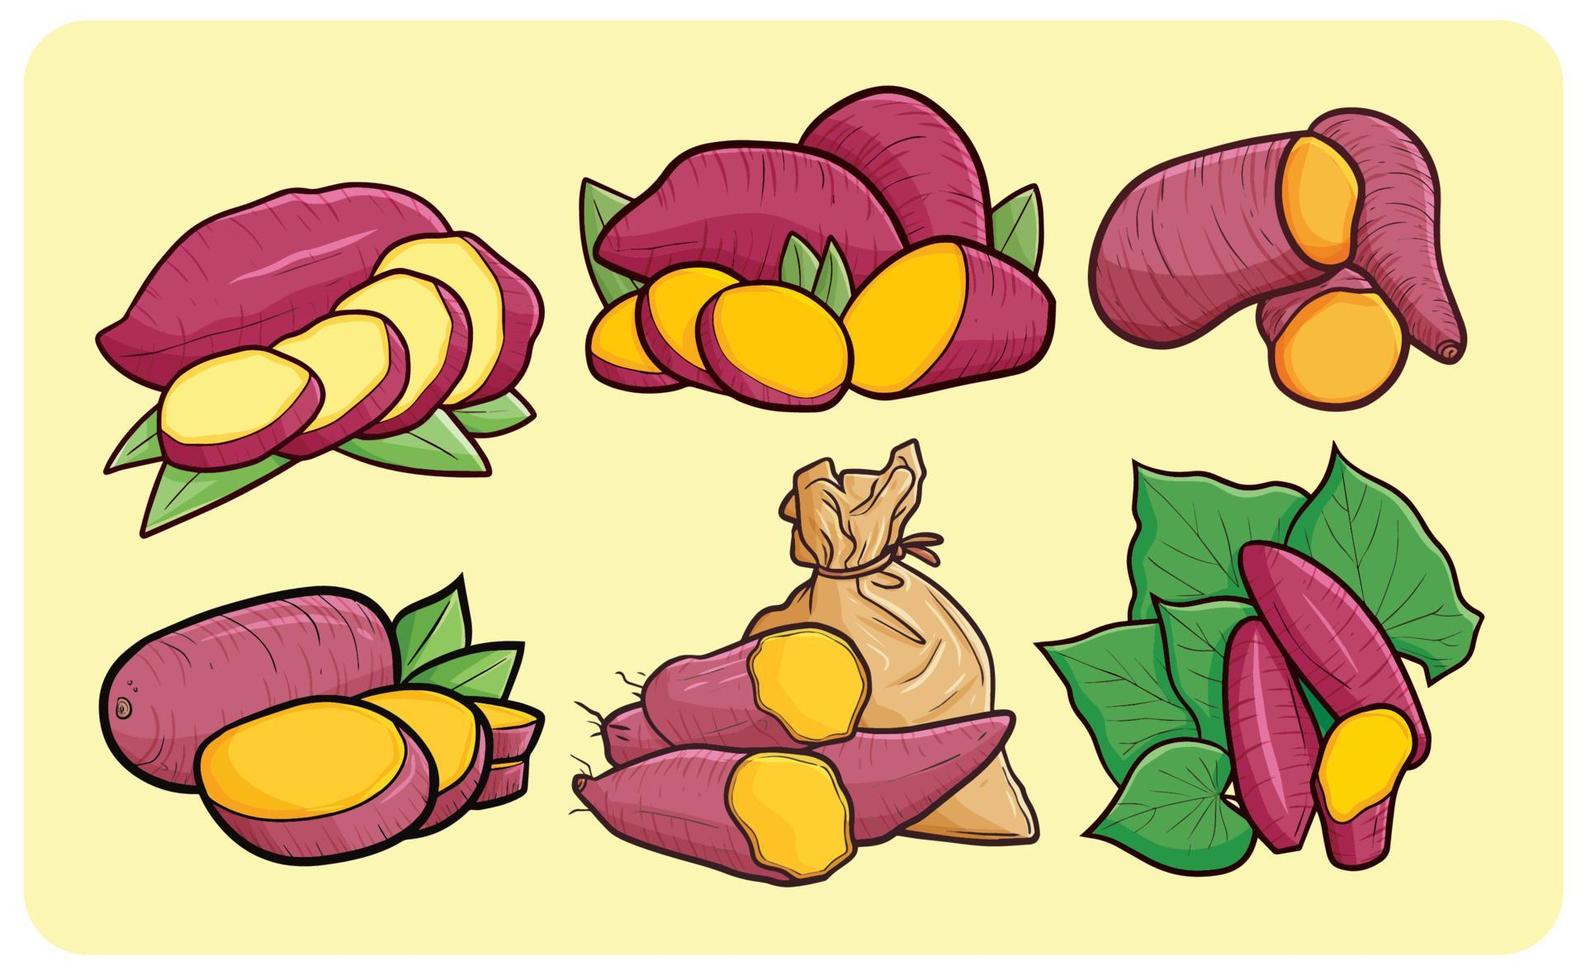 Funny sweet potatoes cartoon illustration set vector